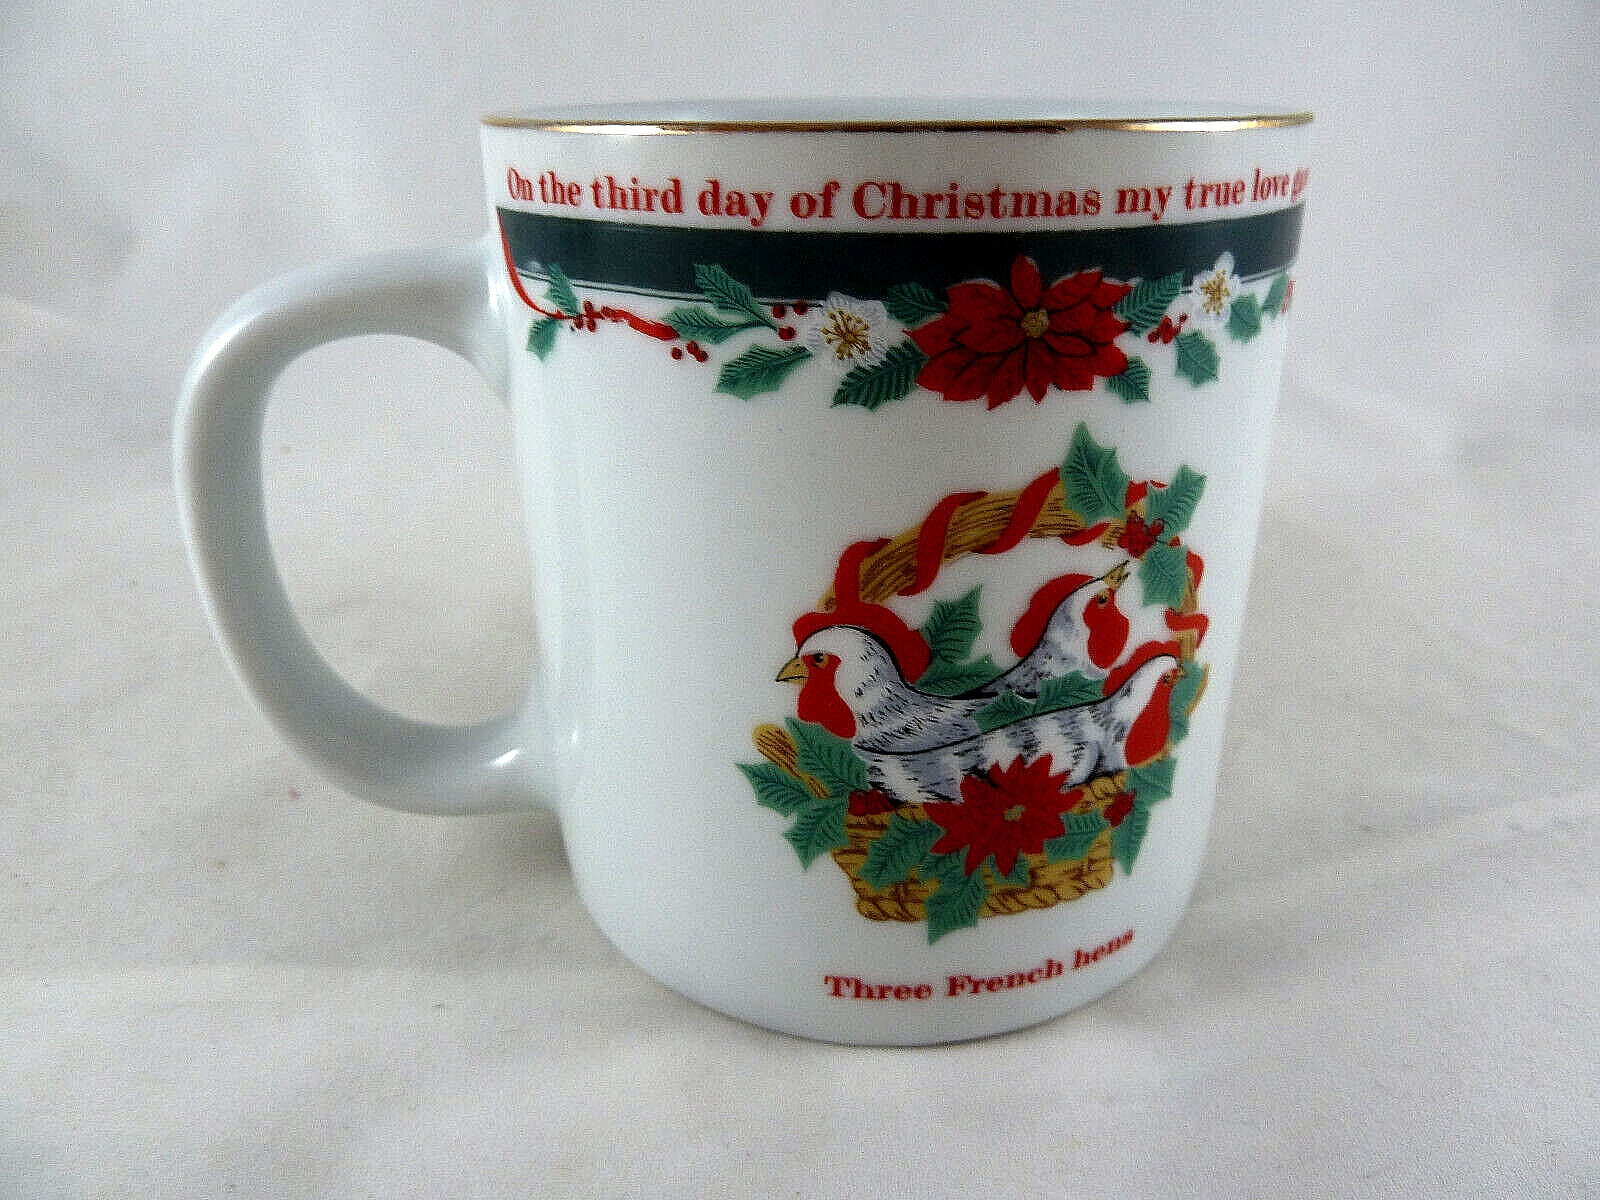 Primary image for Tienshaw Vintage Mug 12 Days of Christmas 3 French Hens 3rd day of Christmas